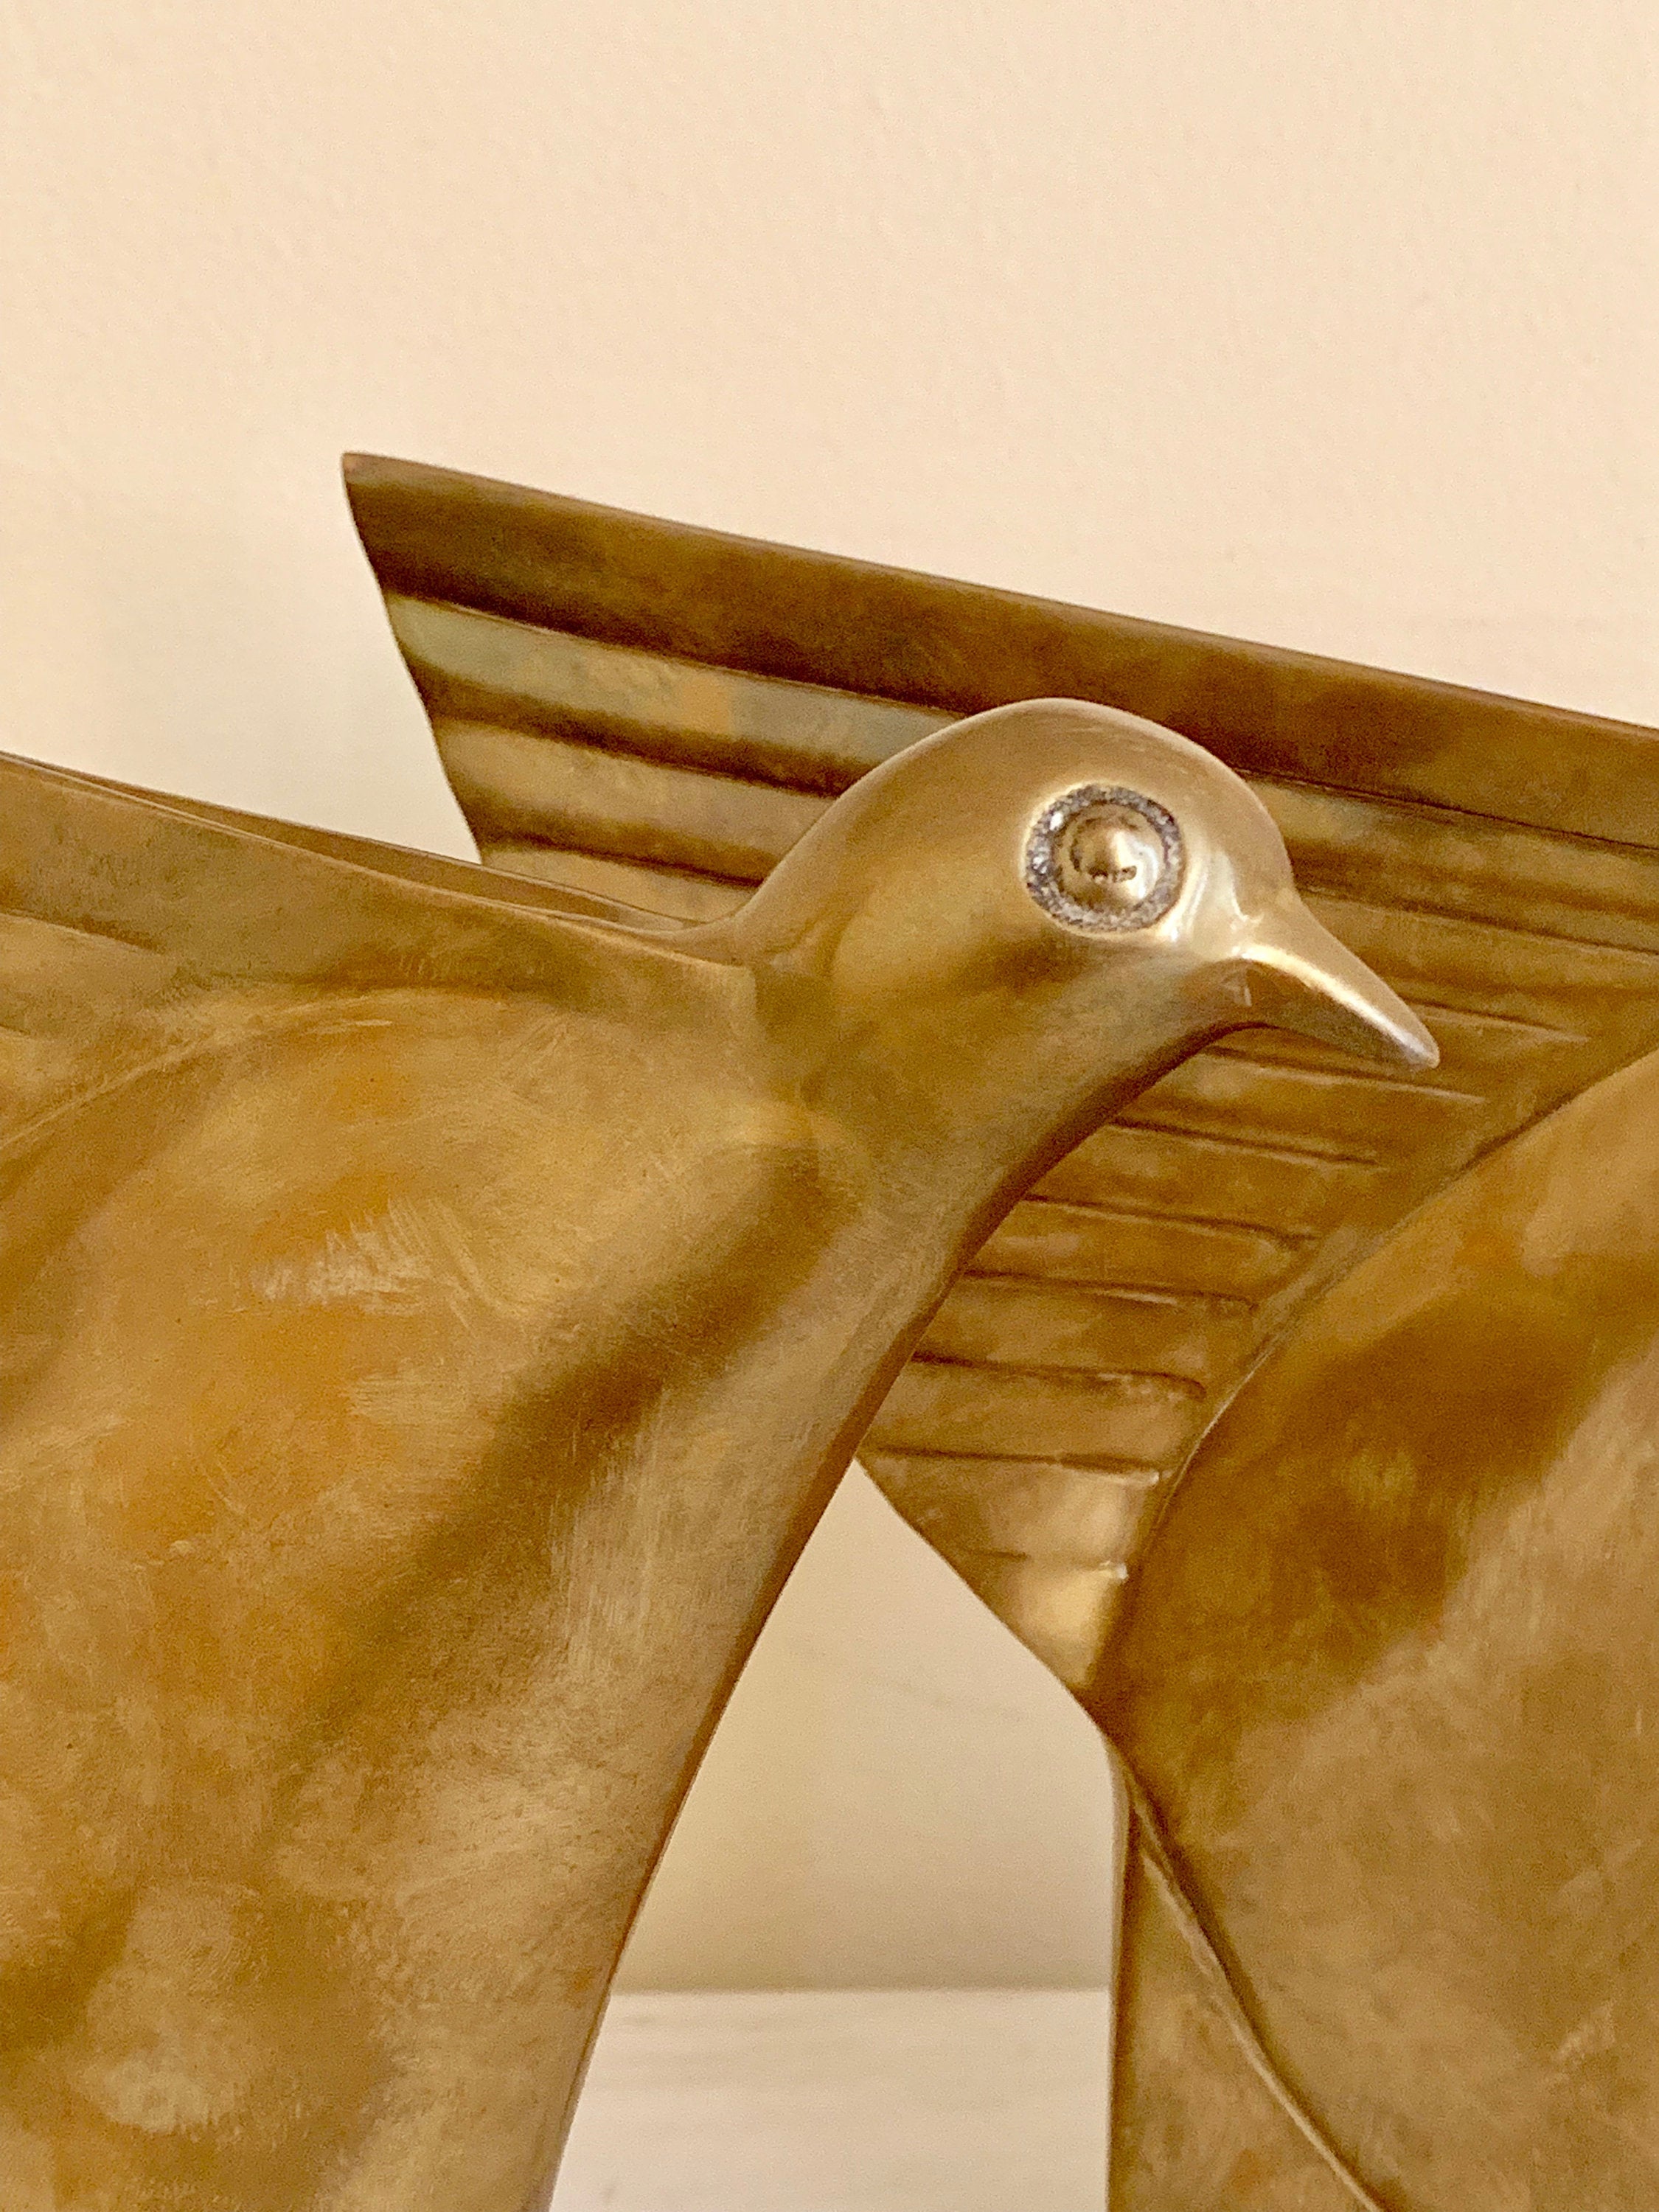 Dolbi Cashier Art Deco Brass Bird Pair 1980